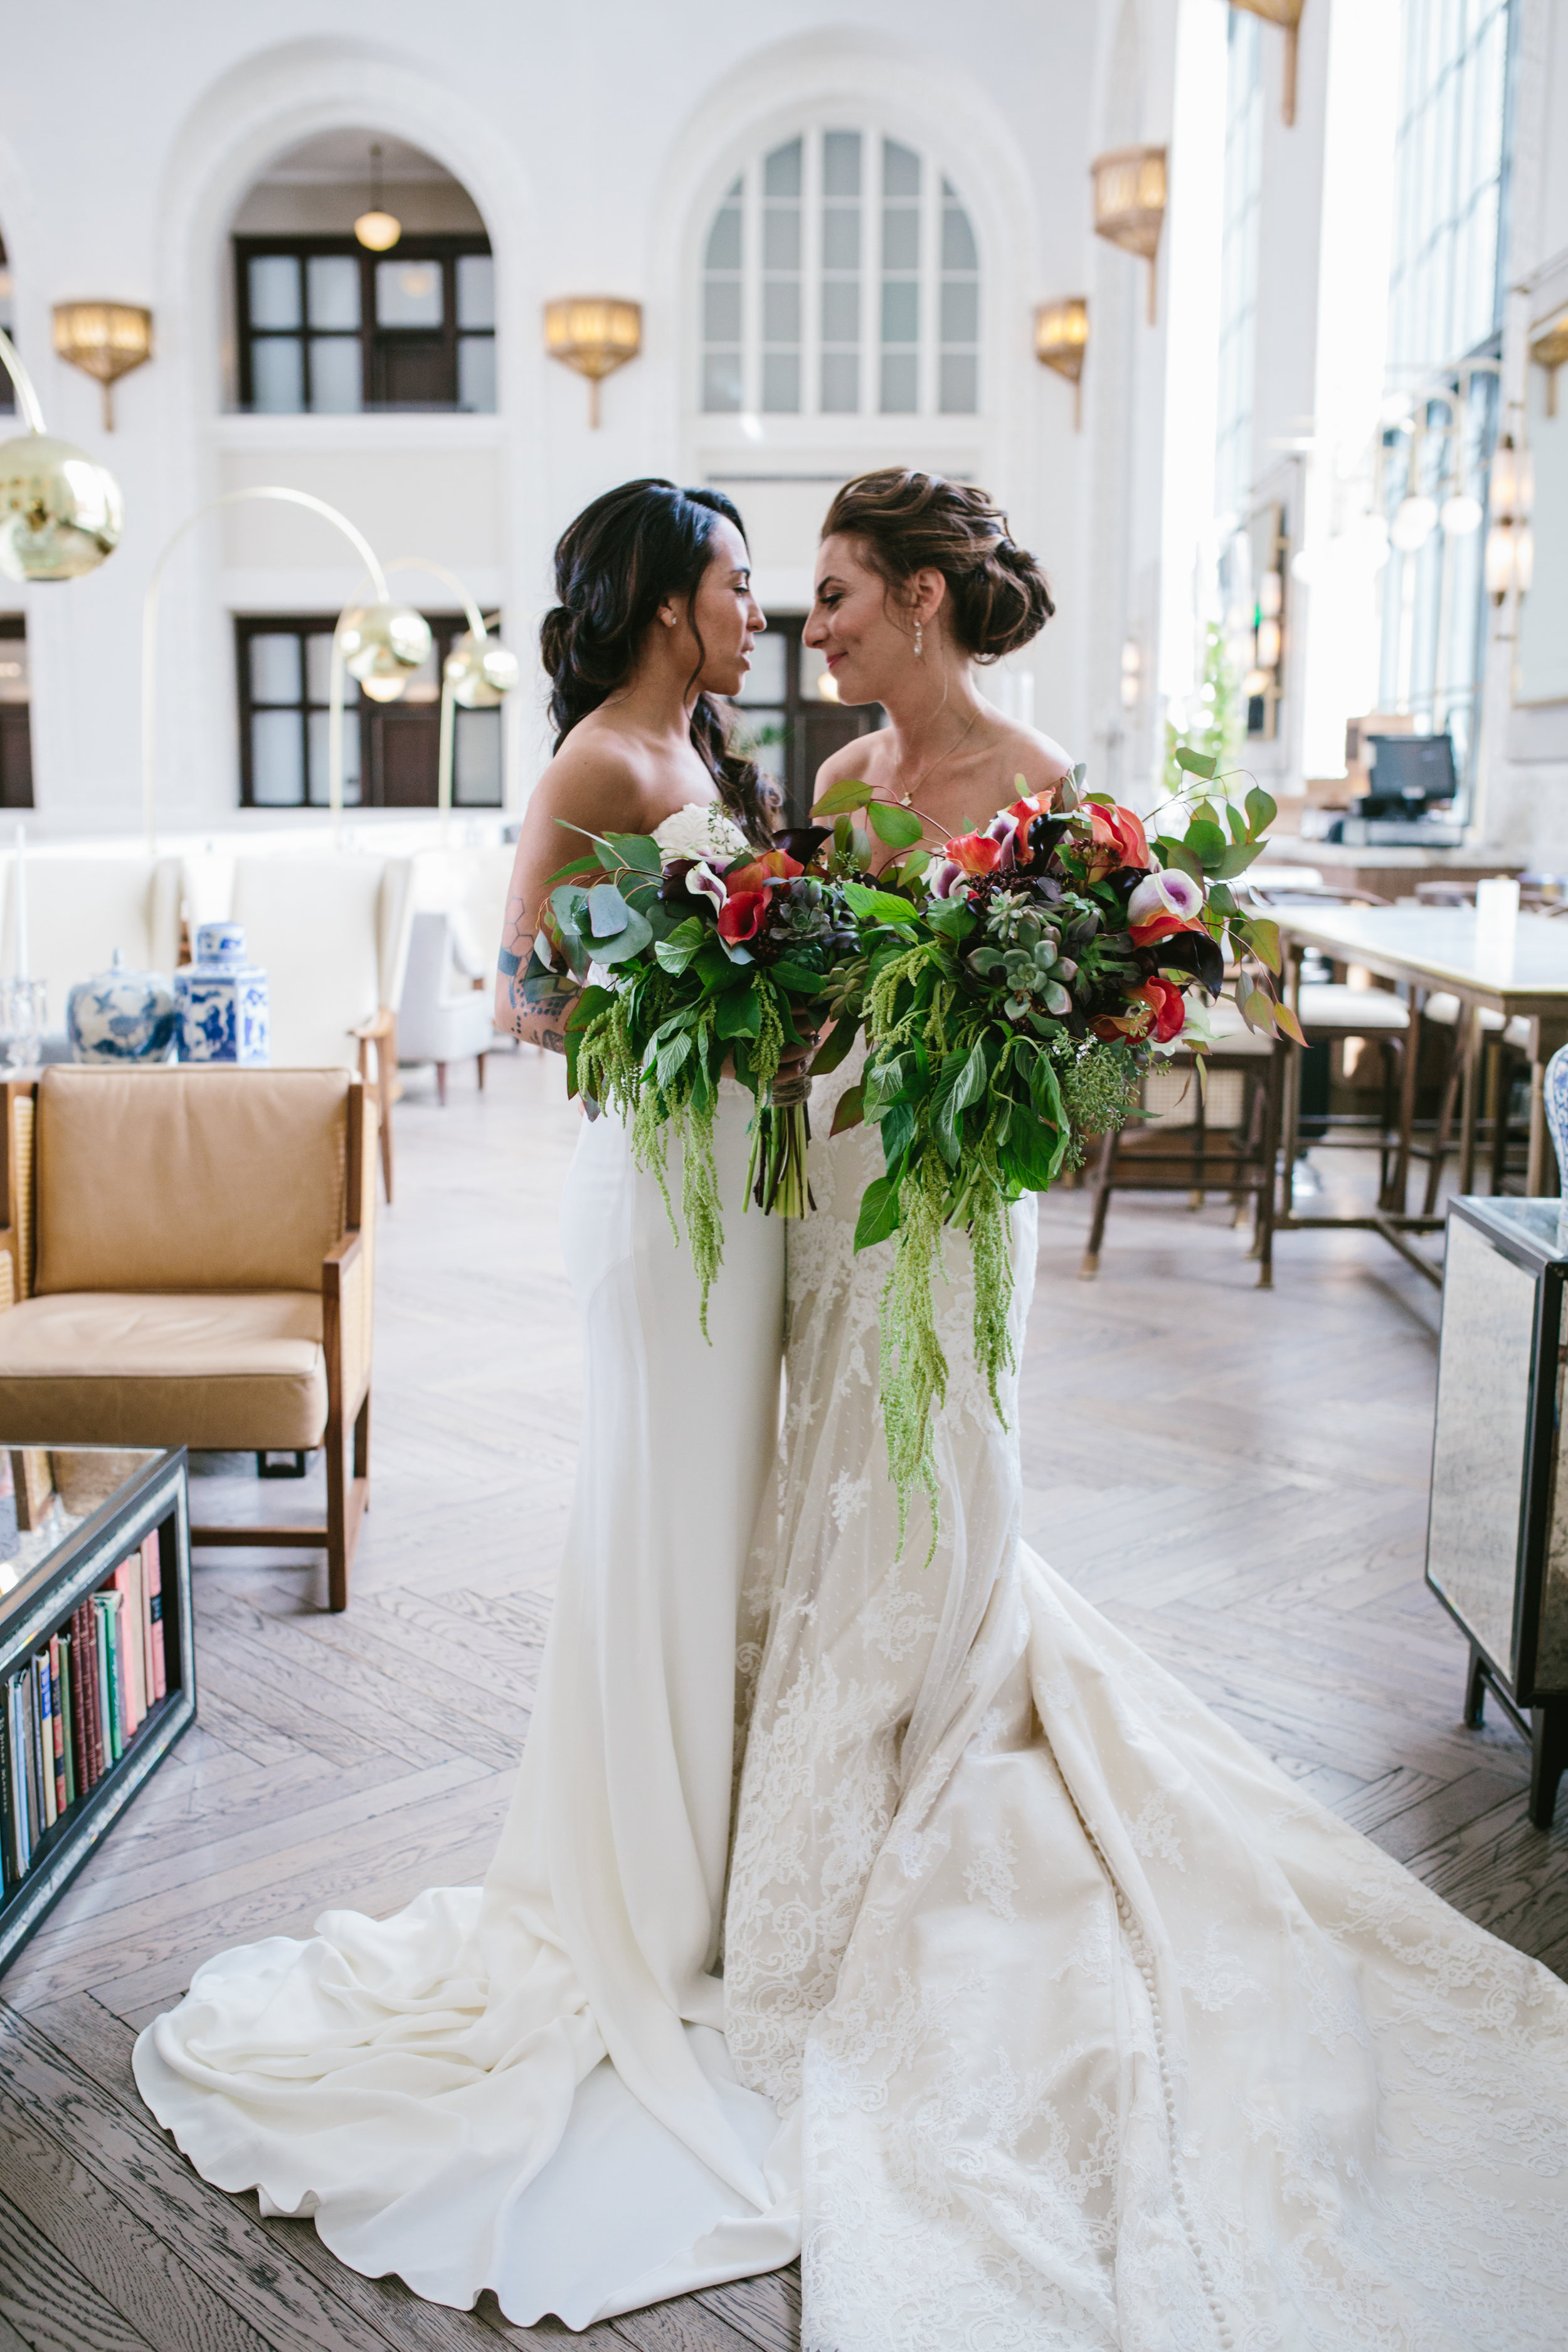  Emily + Jovan | Denver Union Station Wedding | Matthew Christopher Cosette gown from Little White Dress Bridal Shop | Photo by We Are Matt + Jess 